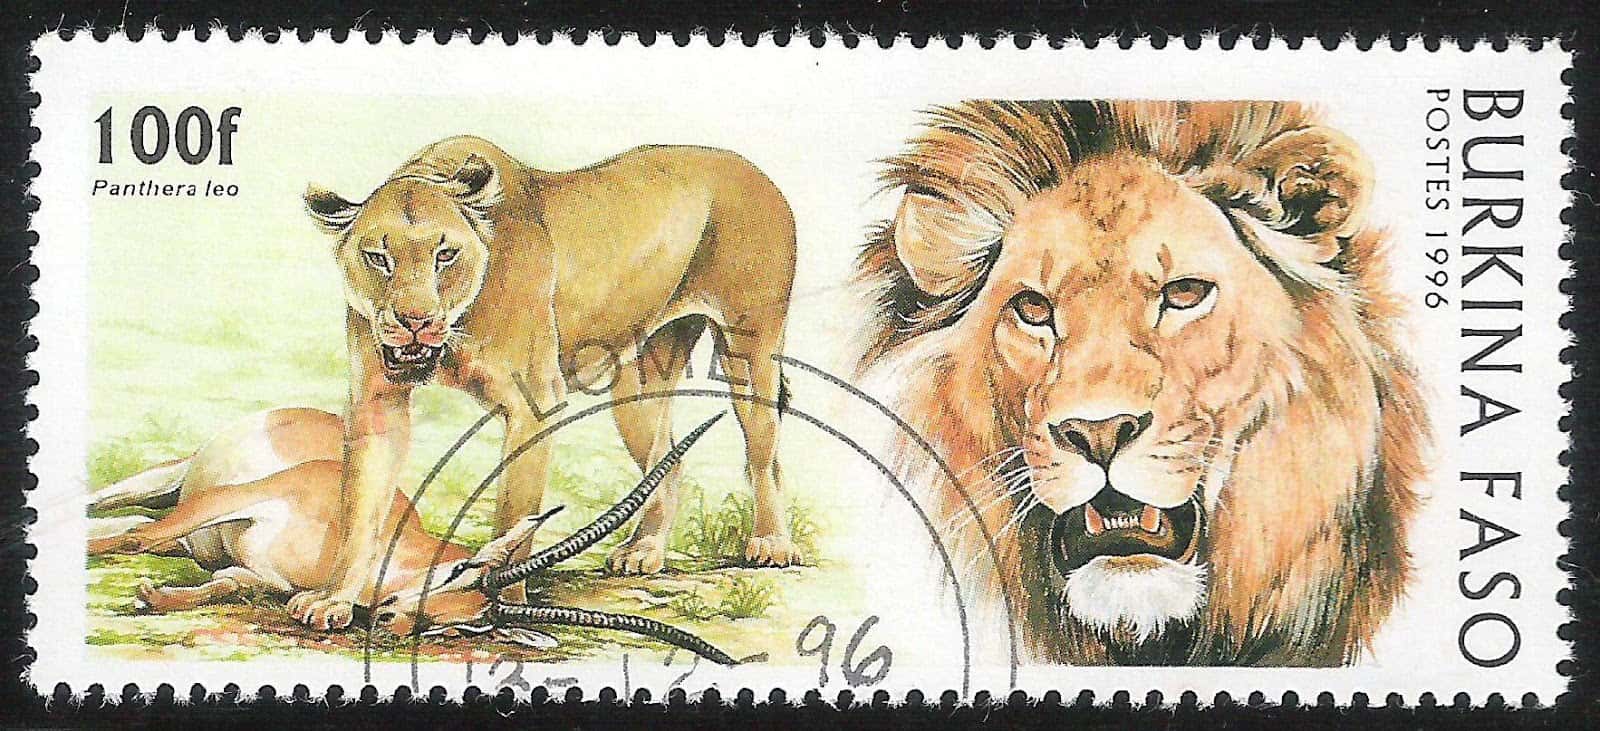 blaise compaore-post stamp burkina faso 